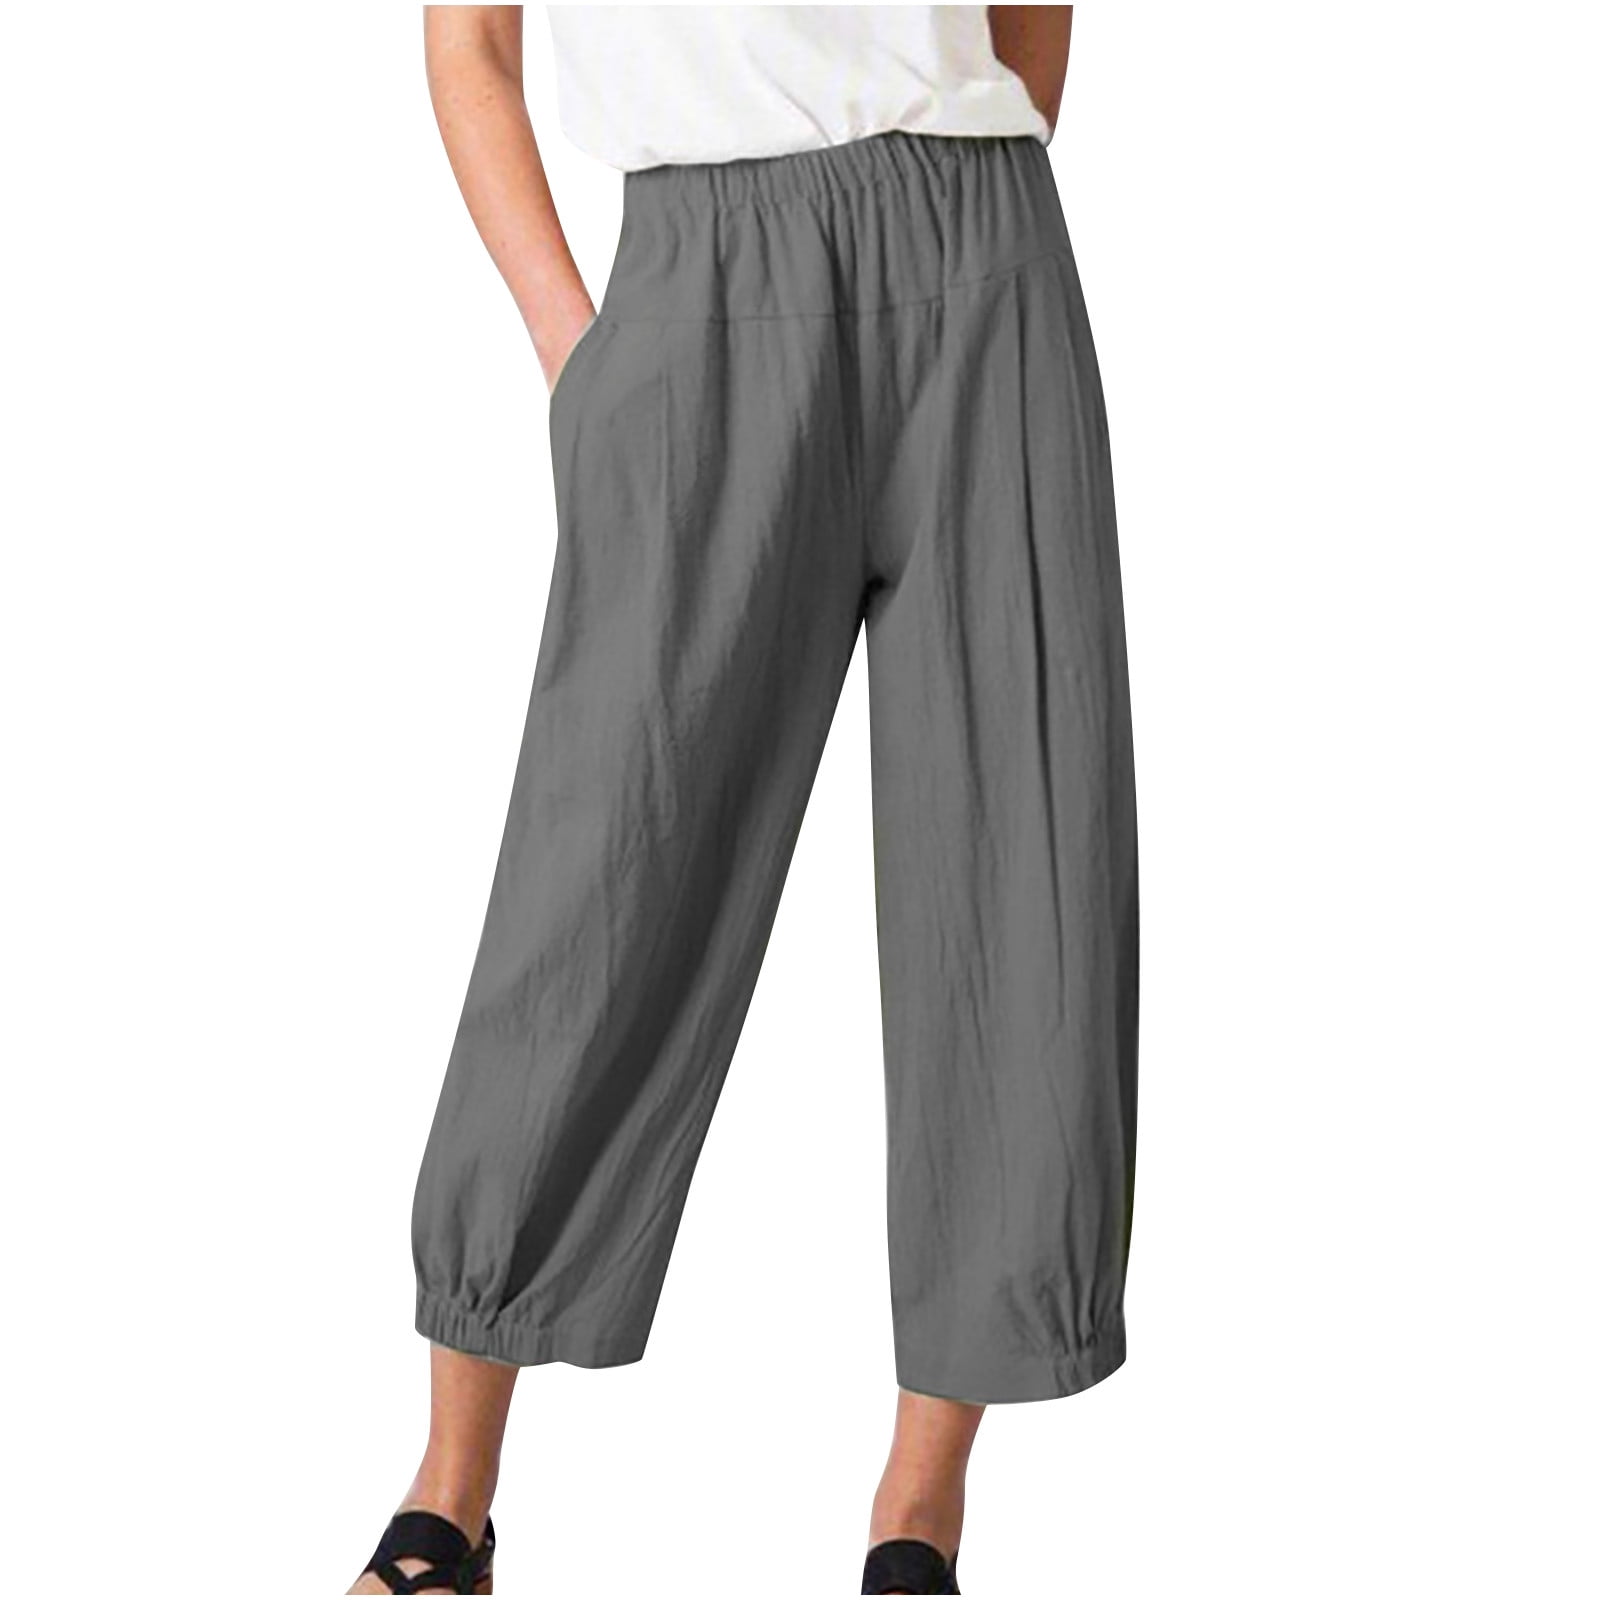 Capri Pants for Women Casual Summer Cotton Linen Pants Loose Elastic Waist  Capris Trousers Wide Leg Cropped Pants with Pockets 